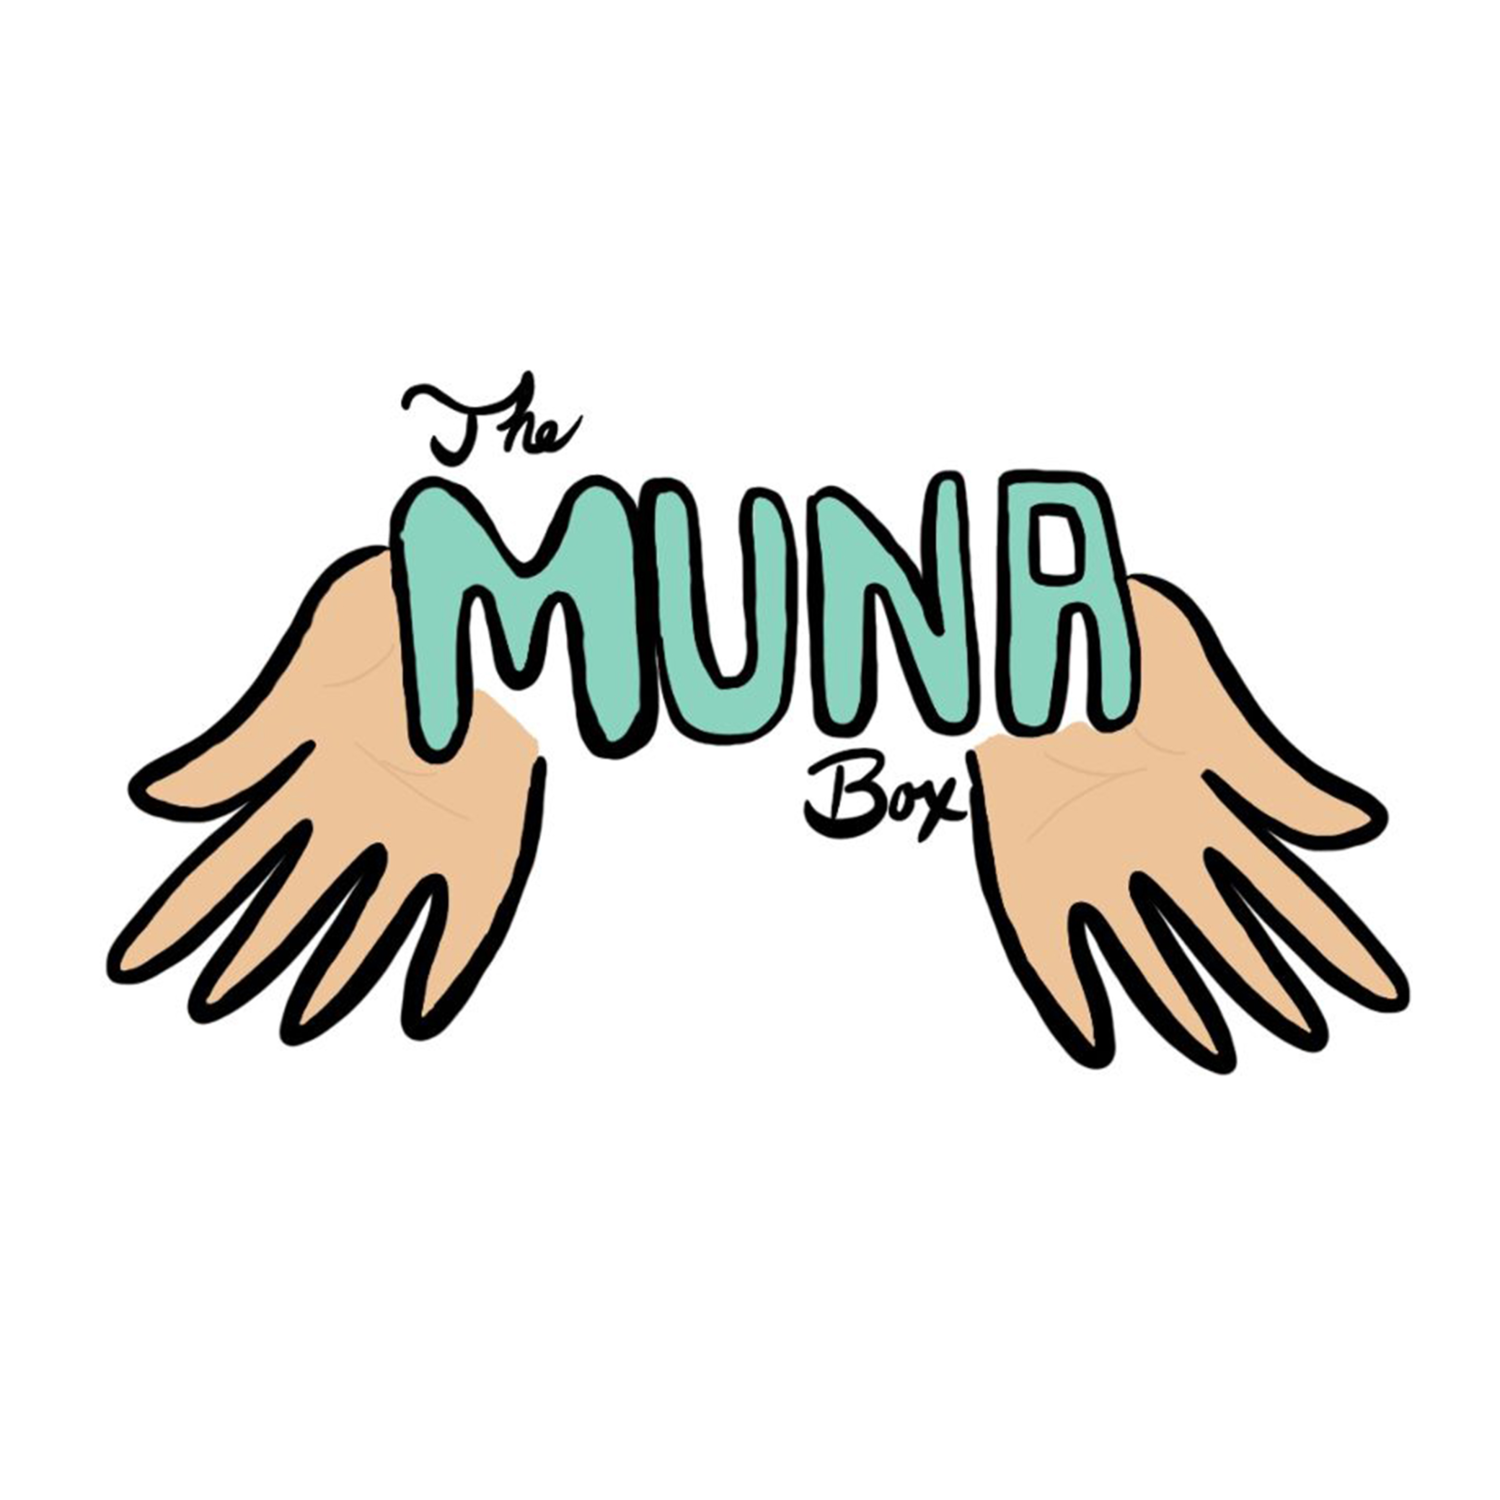 The MUNA Box Project